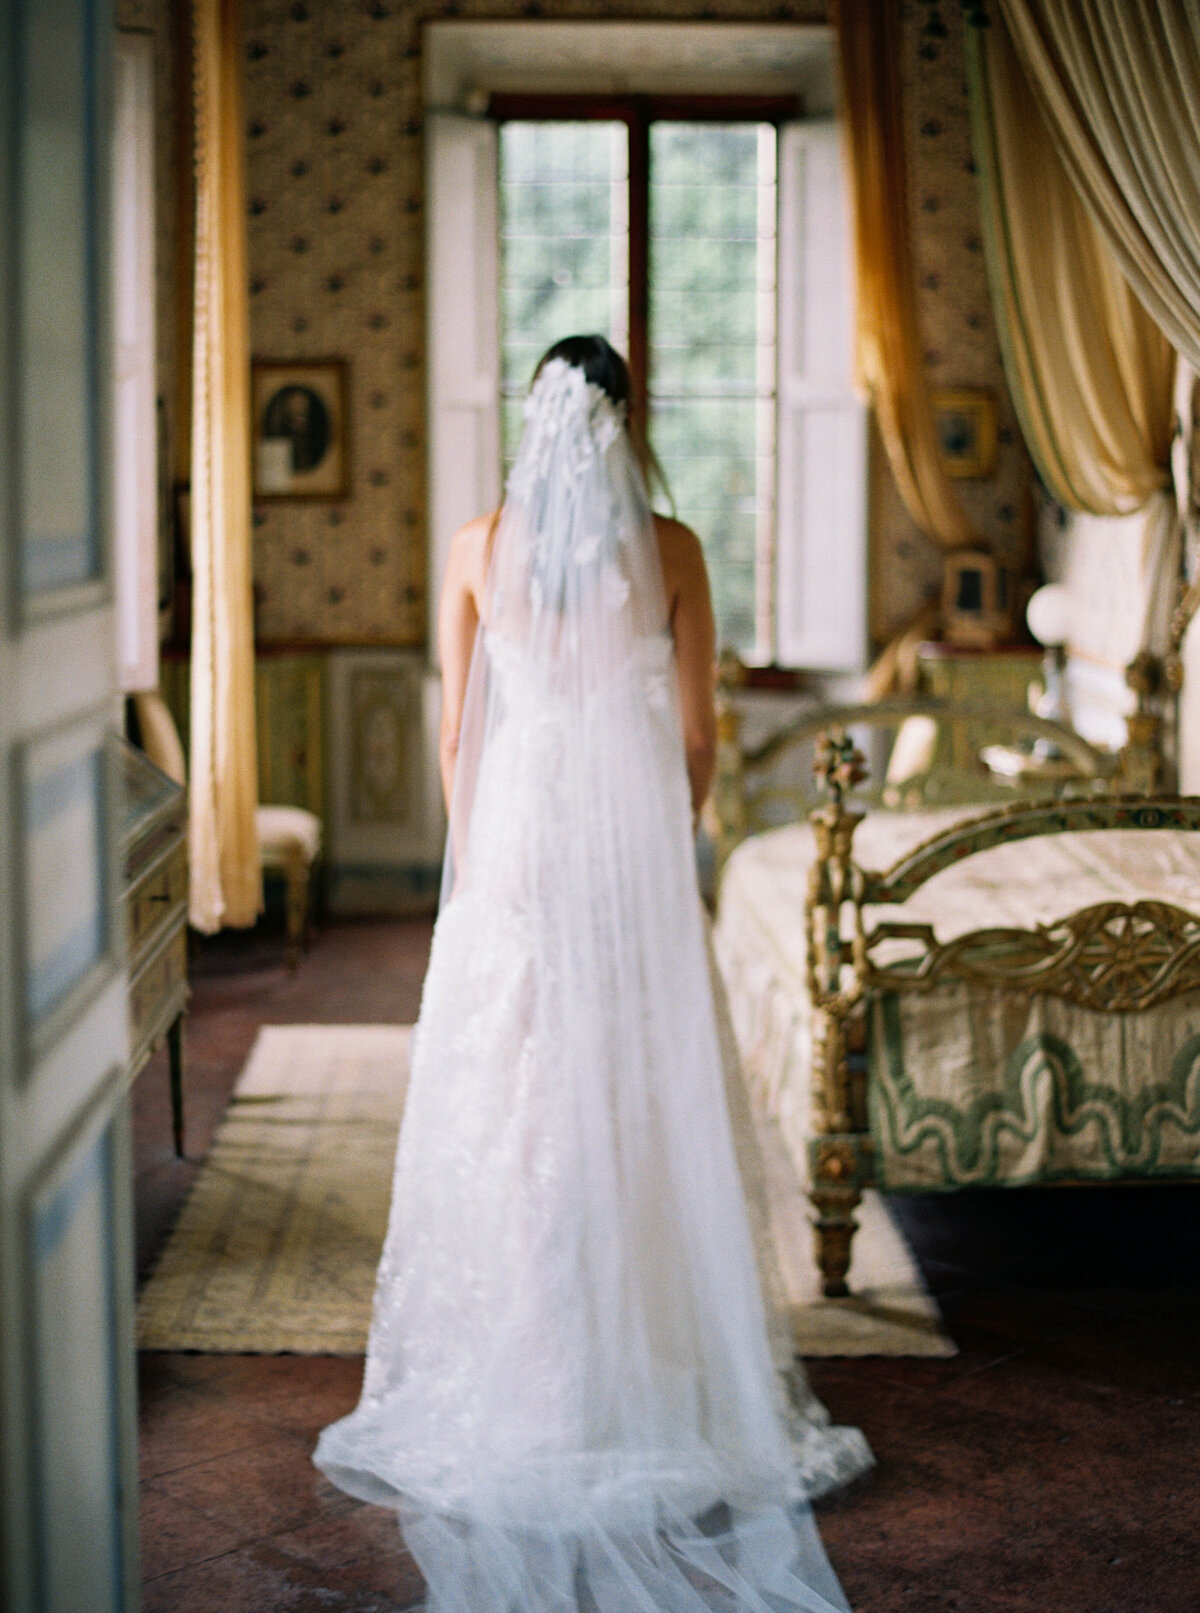 Tuscany Wedding Italy - Janna Brown - Wedding Photographer Tuscany